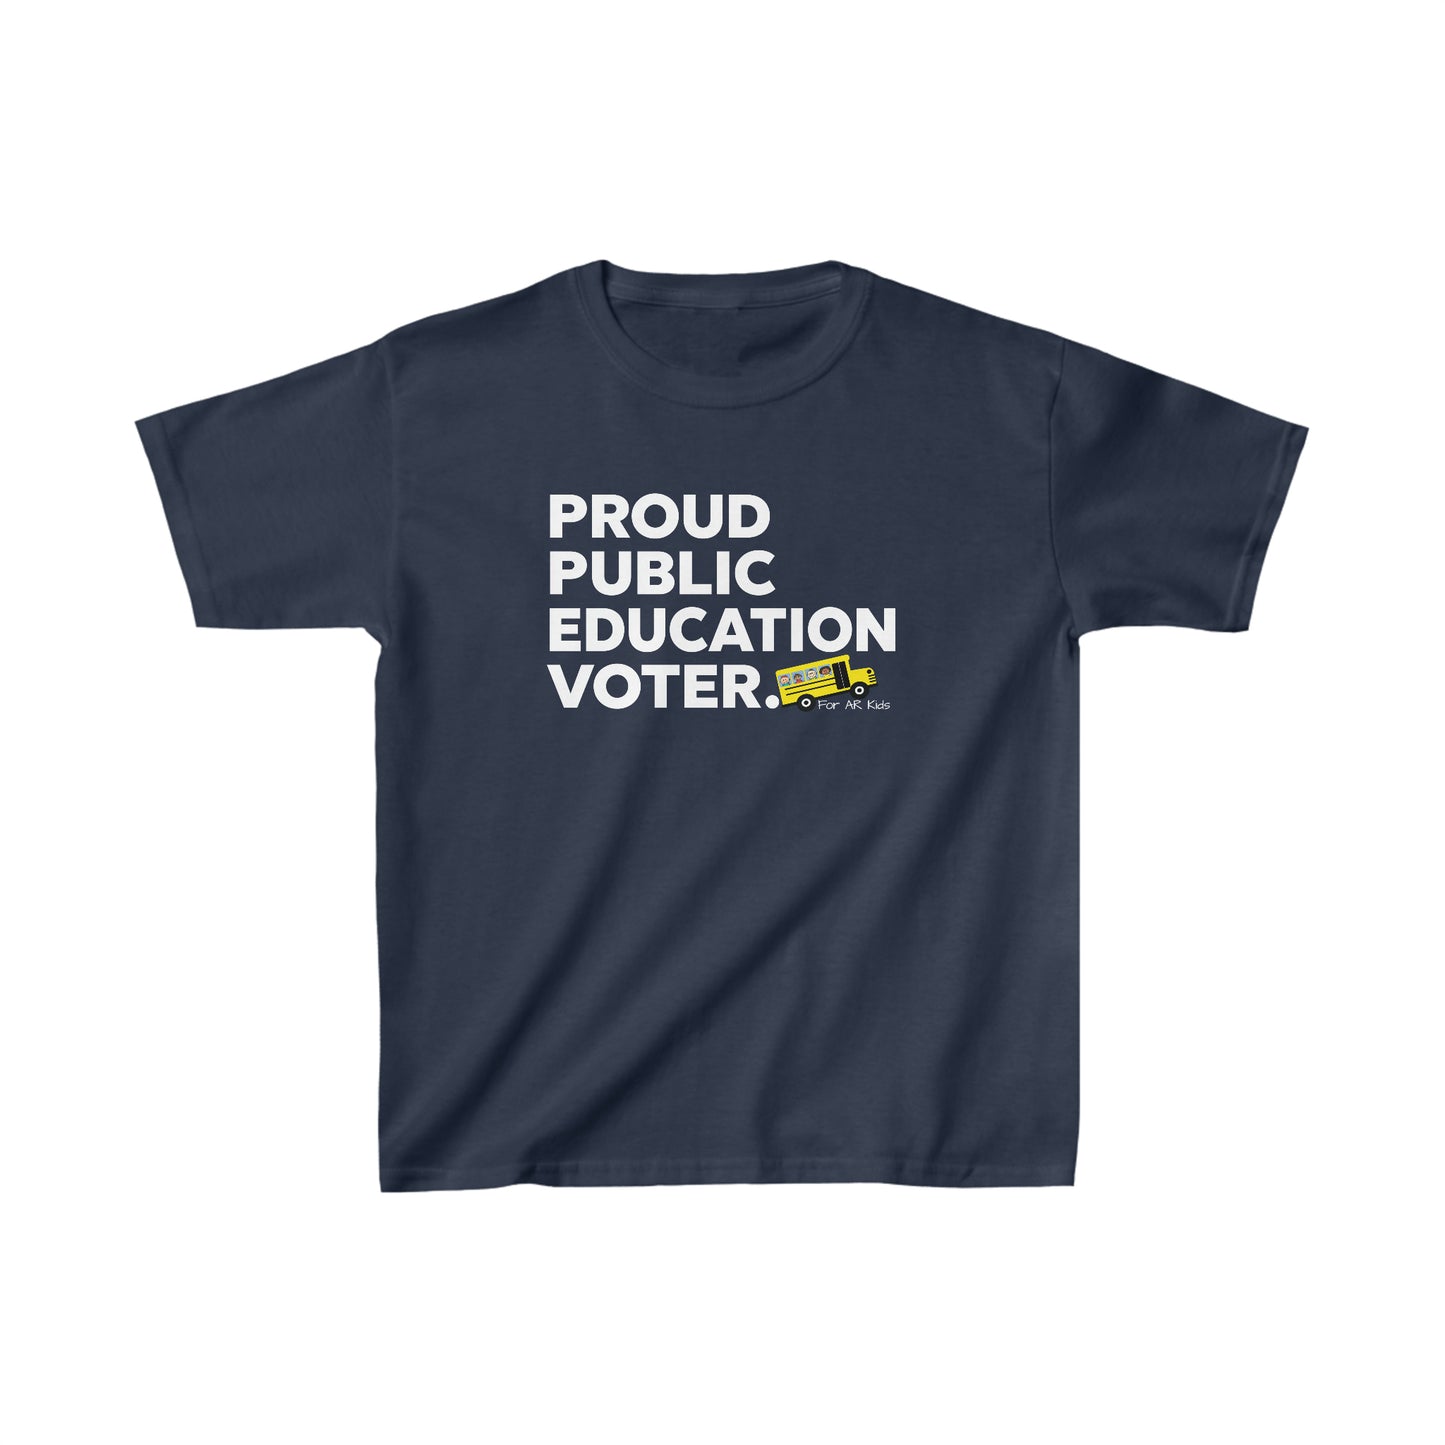 Proud Public Education Voter Kids Shirt, AR Kids Shirt, School Bus Shirt, Youth Shirt